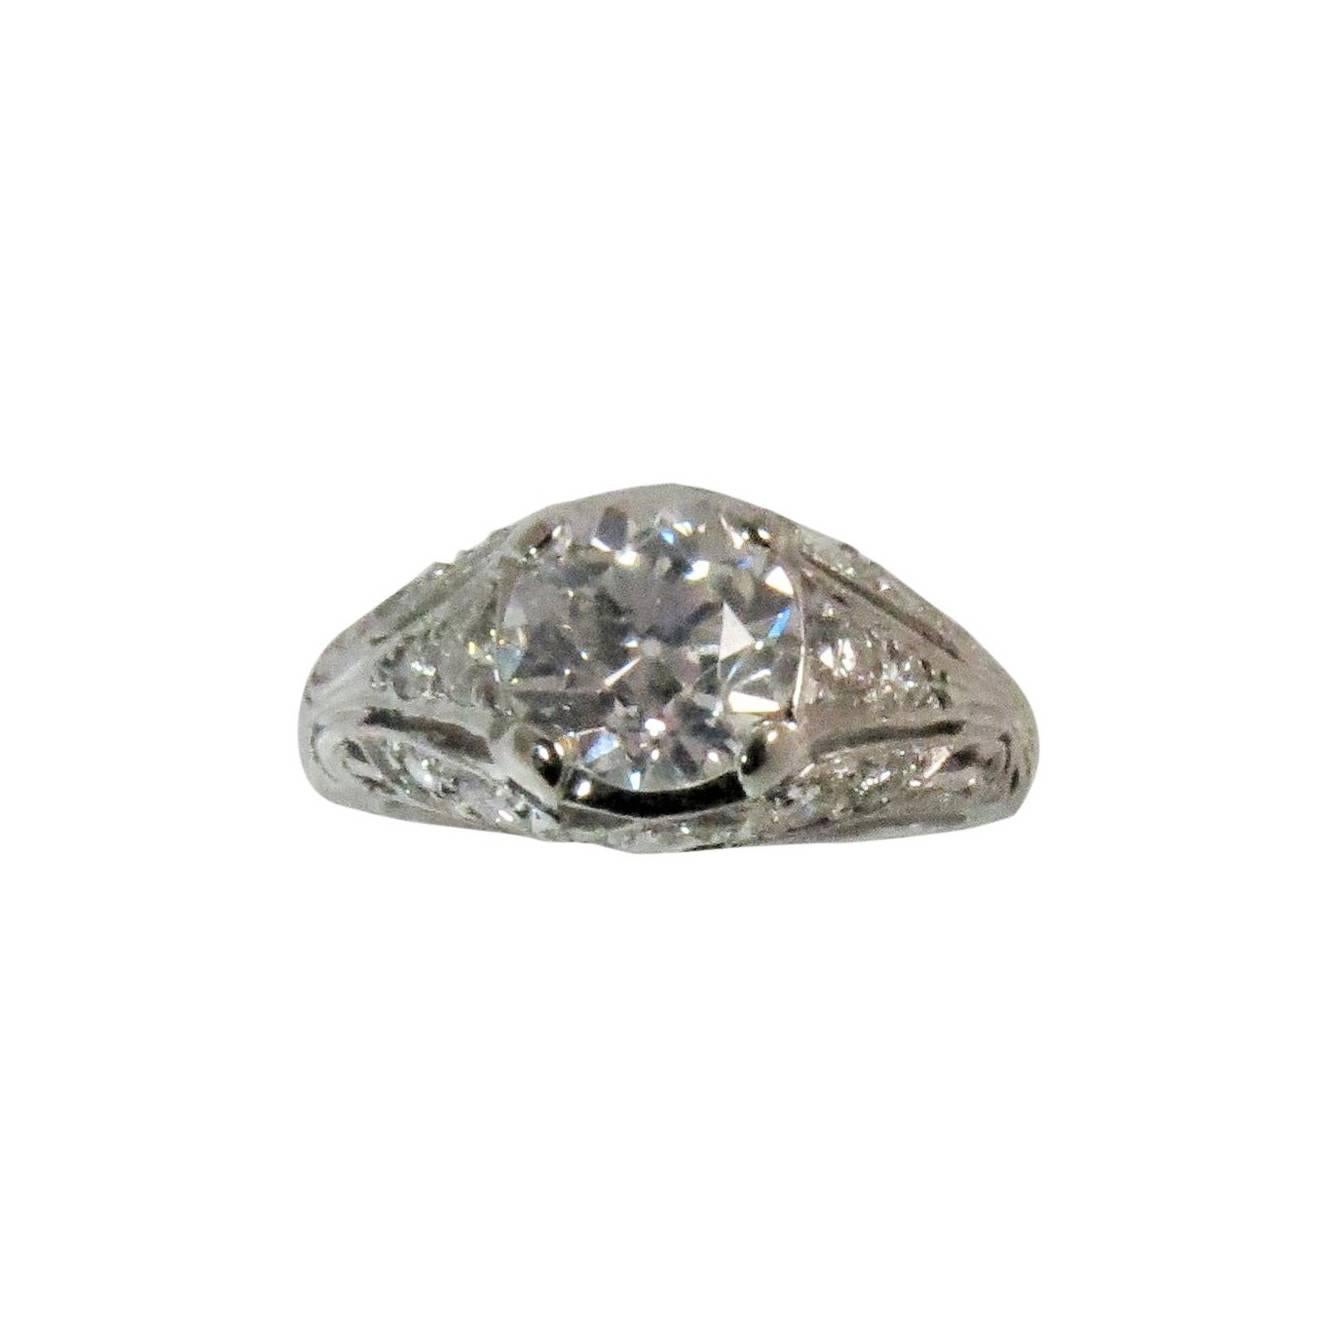 Vintage Platinum Ring With European Cut Diamond For Sale